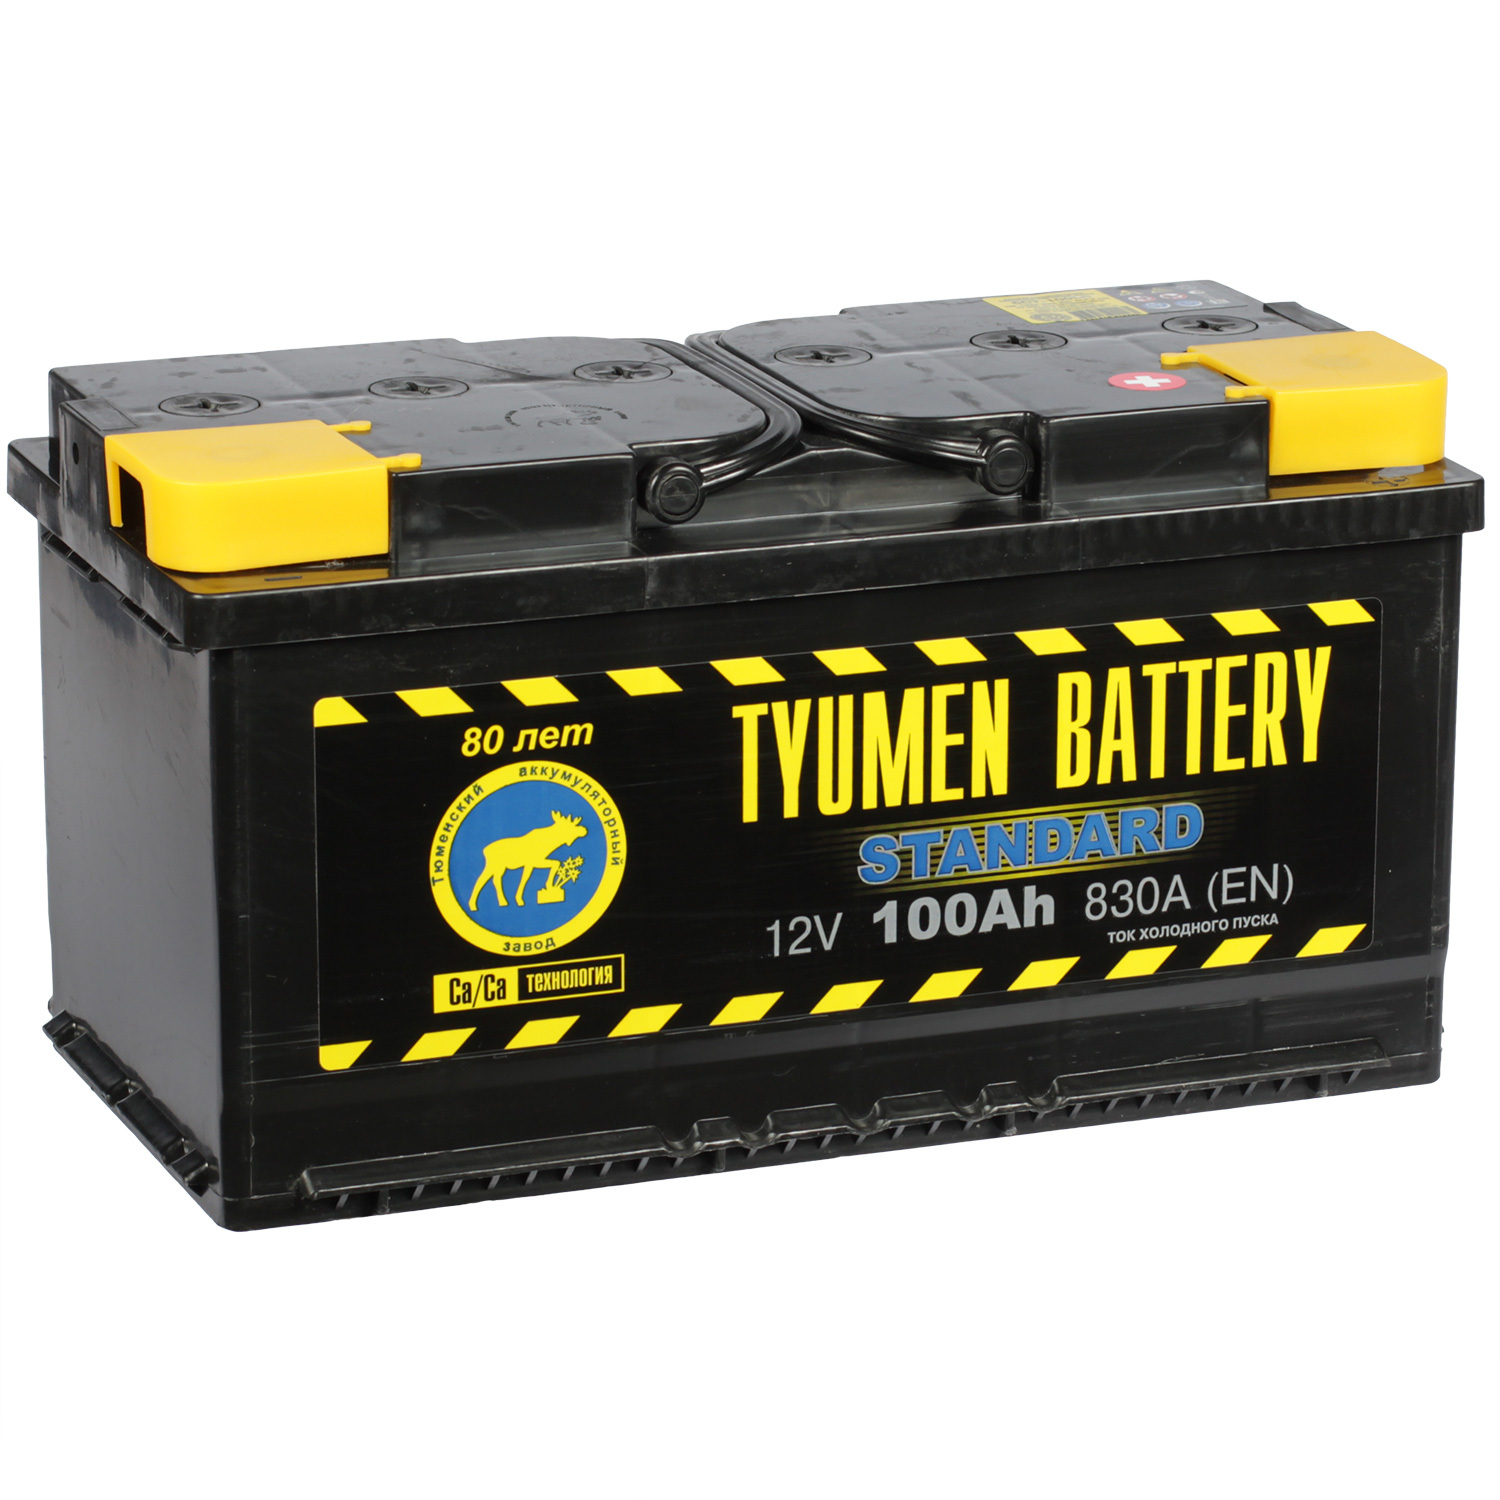 Tyumen Battery Автомобильный аккумулятор Tyumen Battery Standard 100 Ач обратная полярность L5